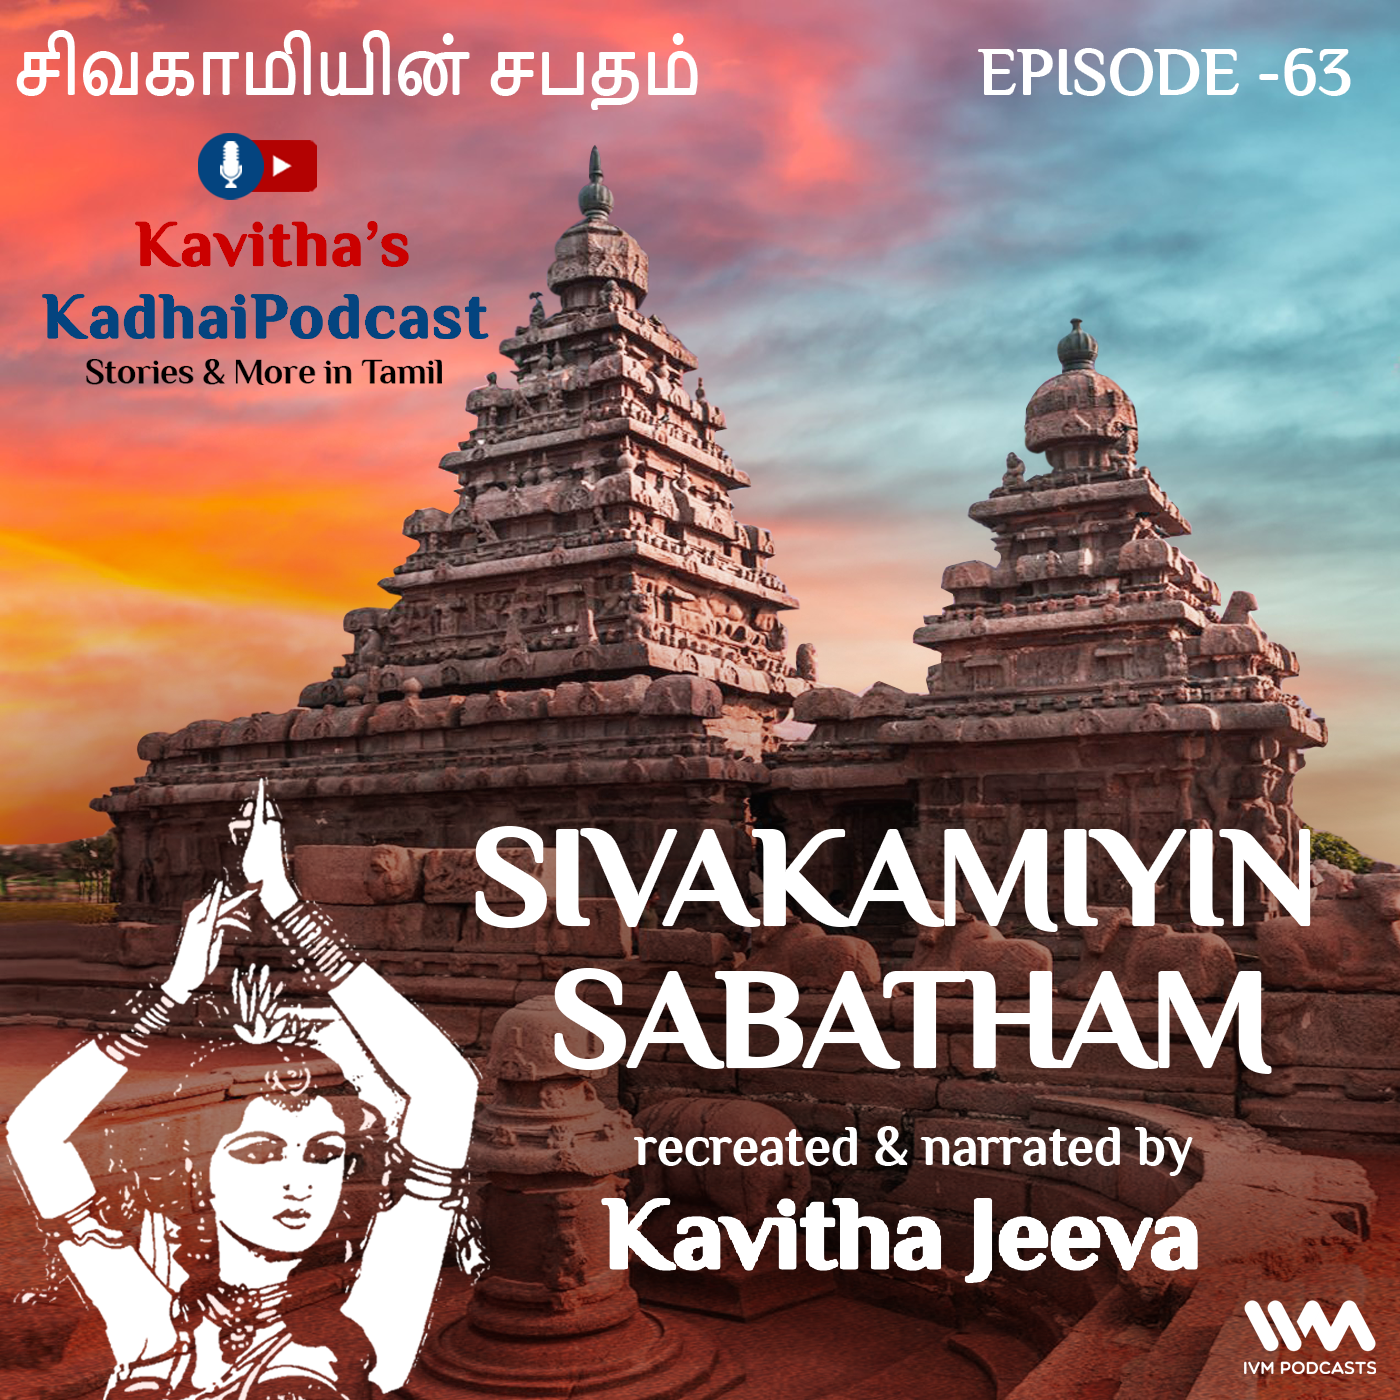 KadhaiPodcast's Sivakamiyin Sabatham - Episode # 63